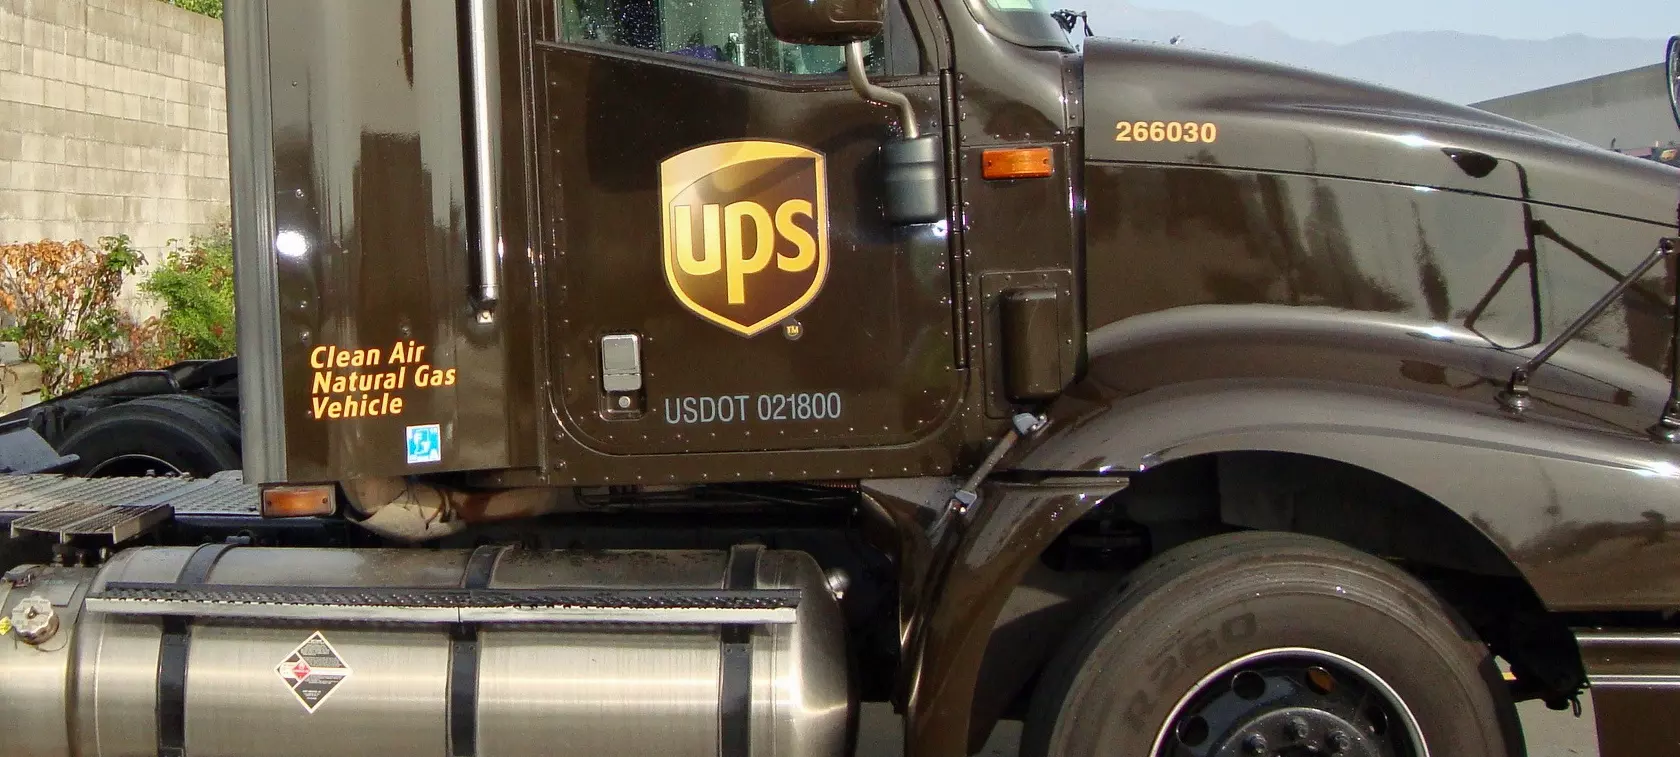 UPS supports alternative fuels